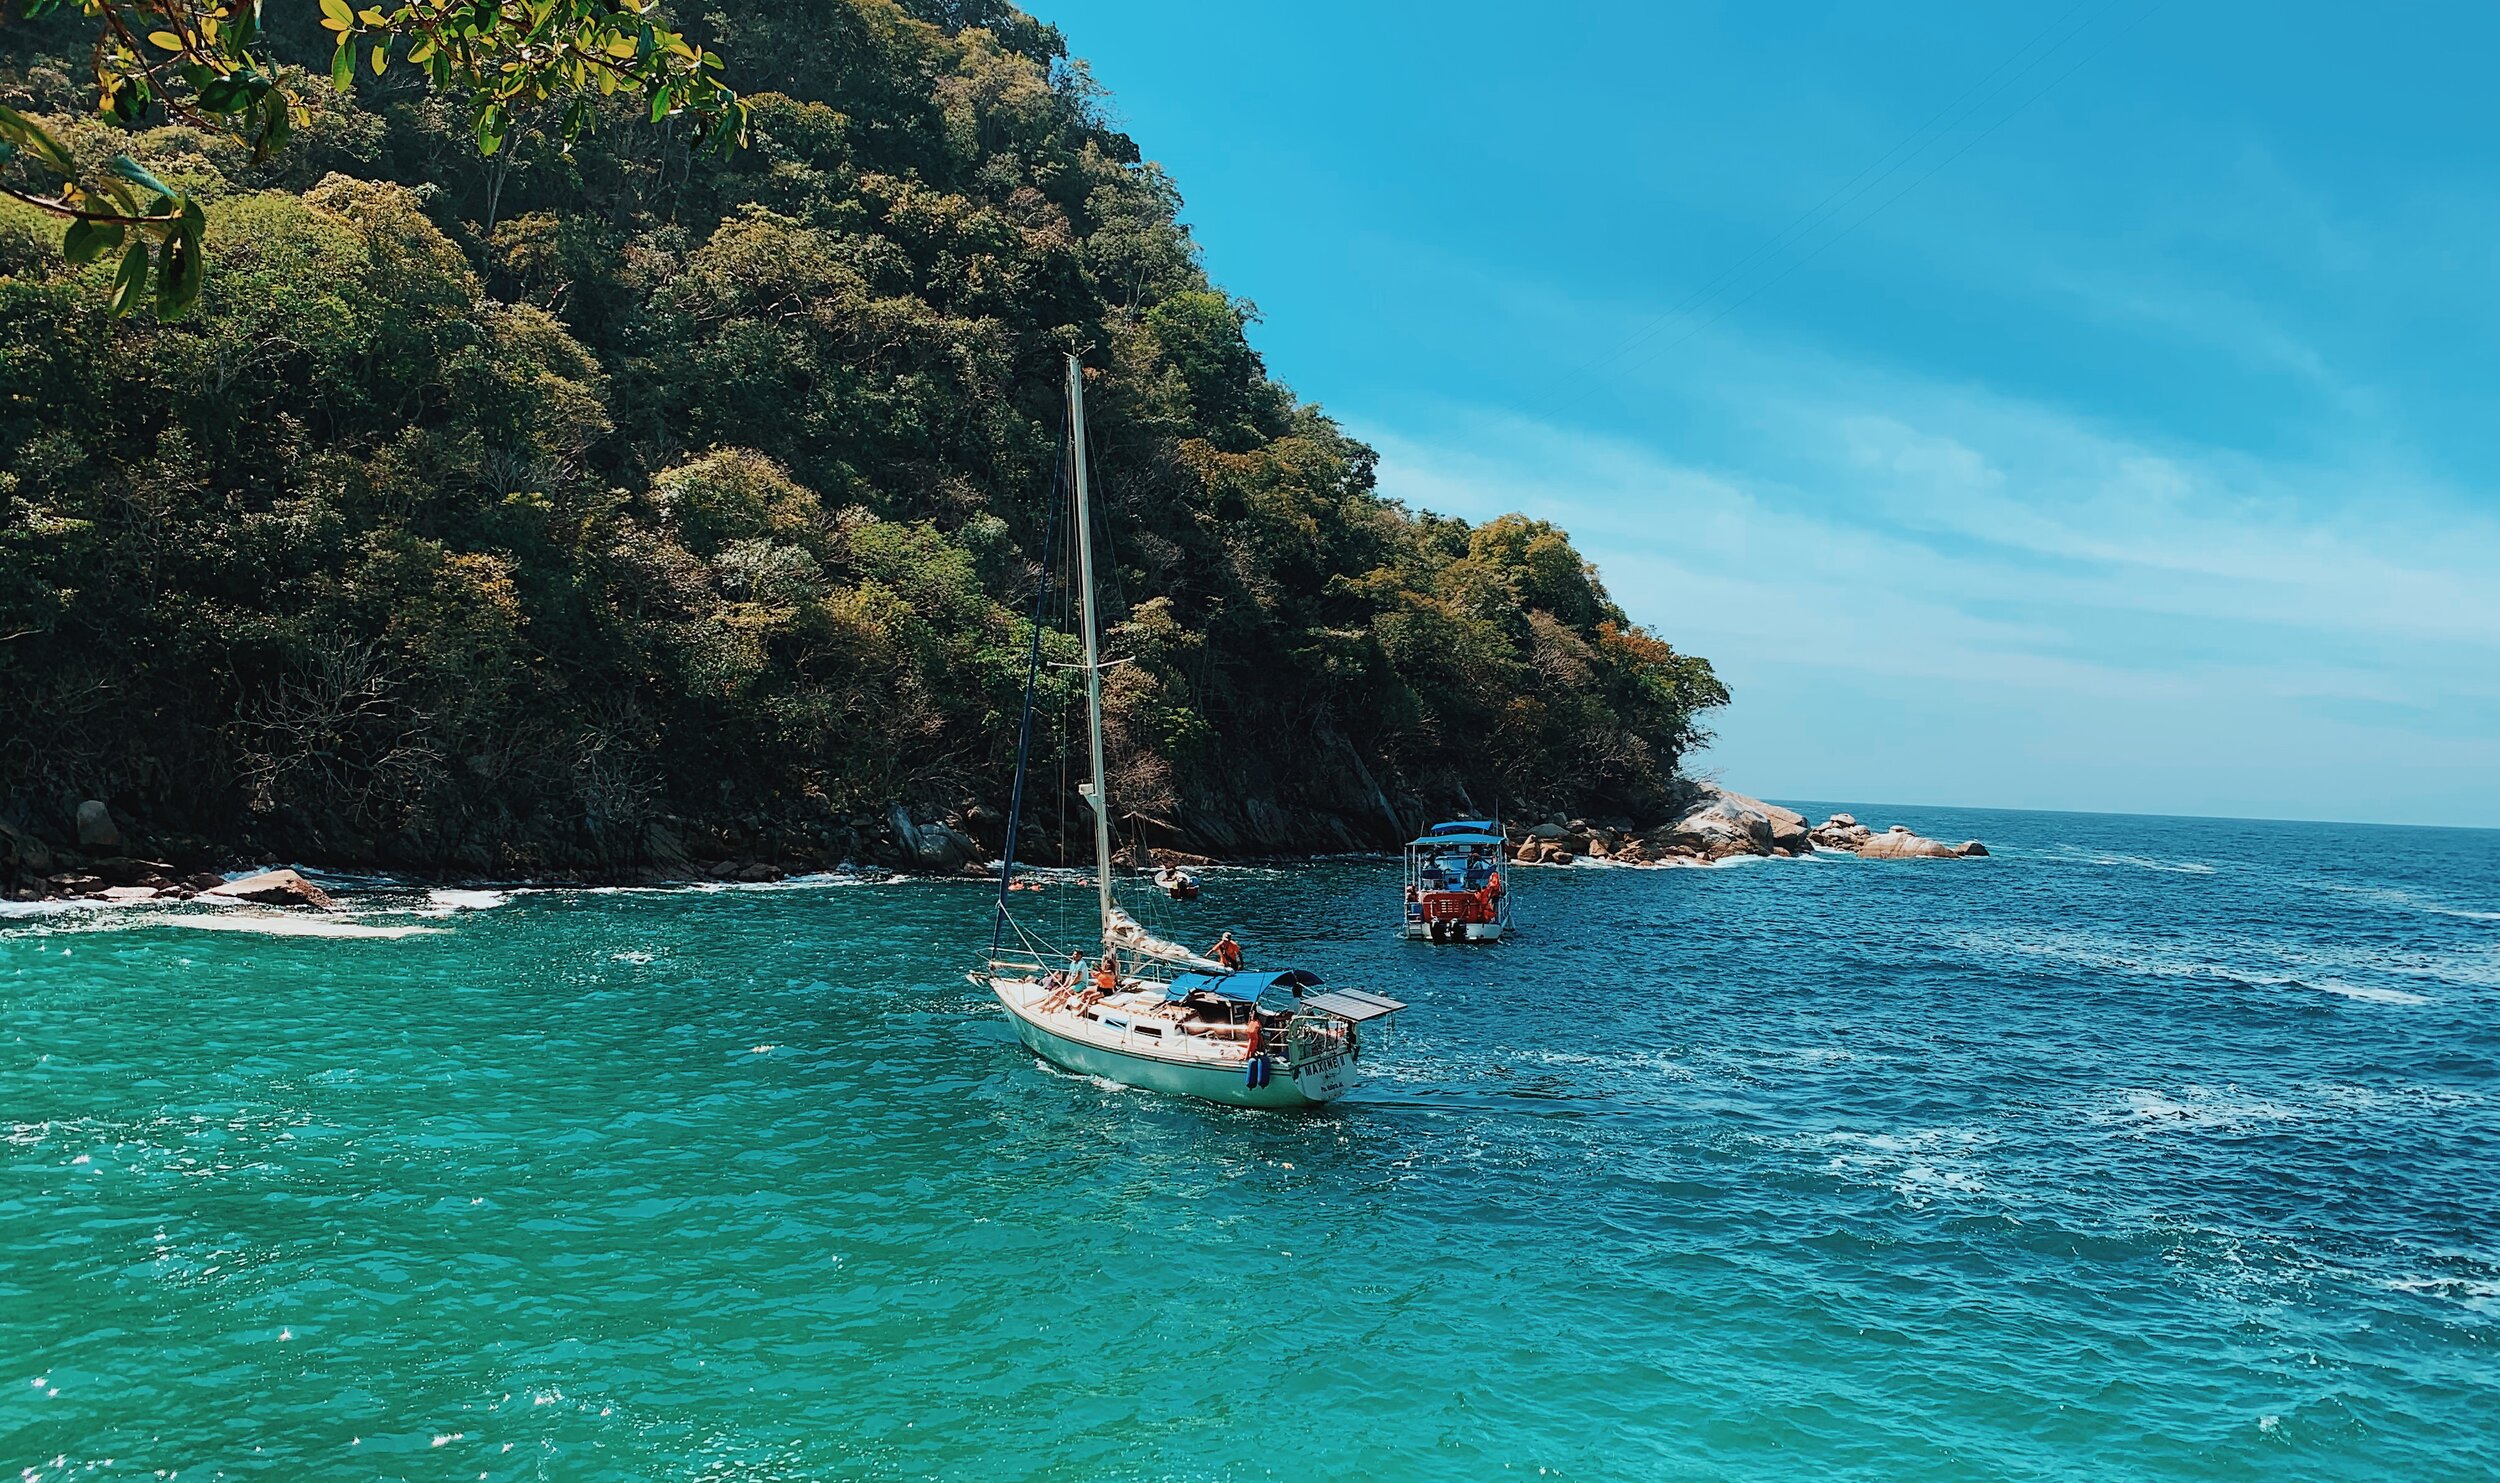 A lone boat sailing off the coast of Boca de Tomatlan.JPG